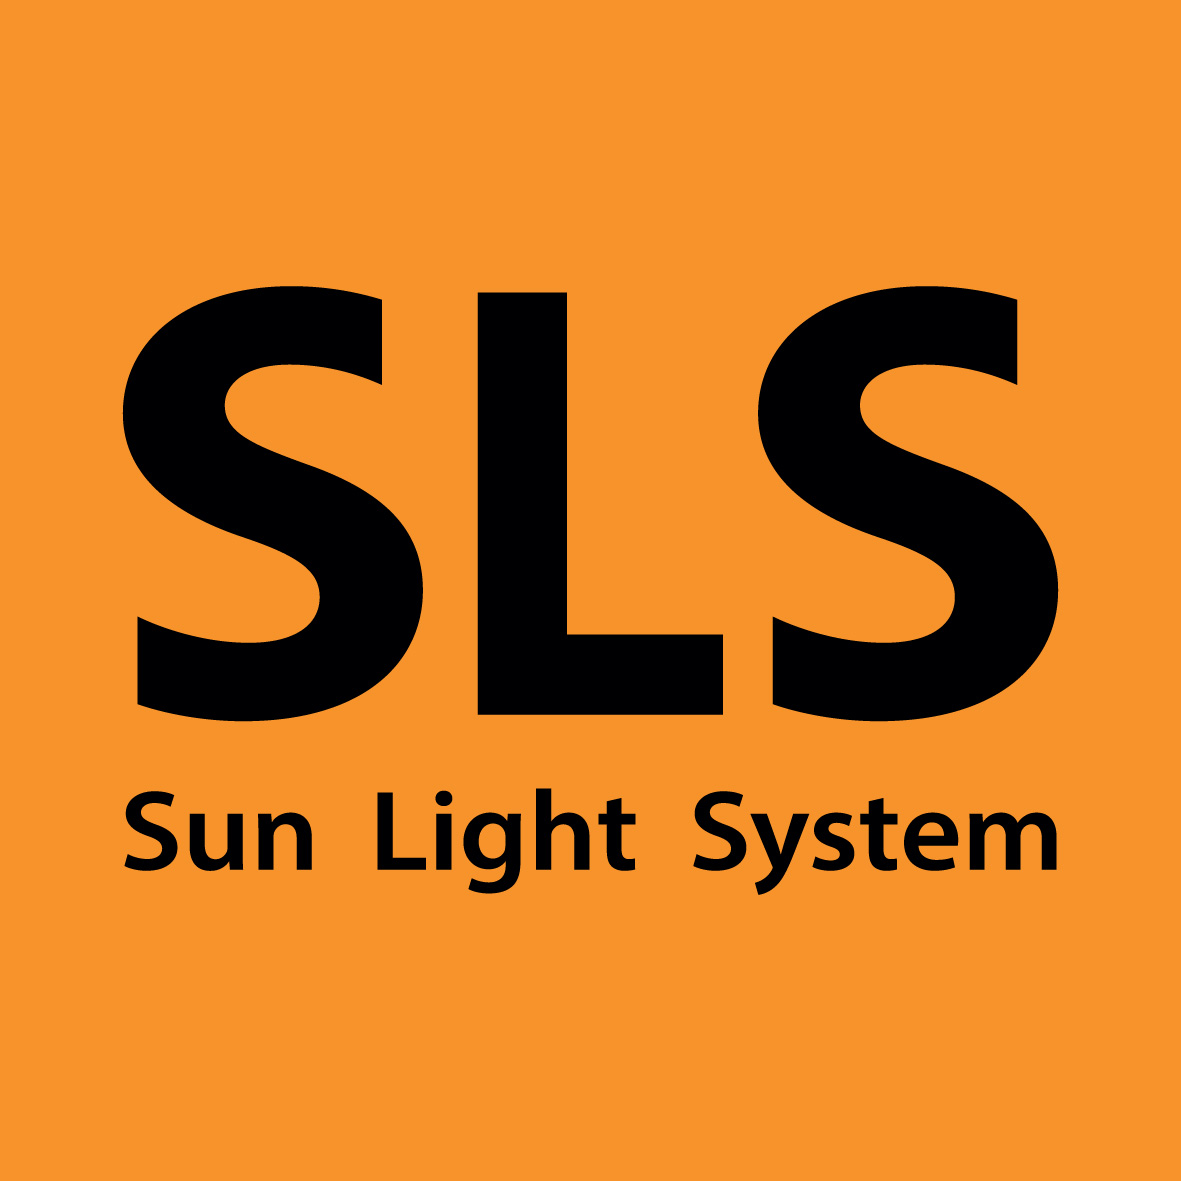 Sun Light System